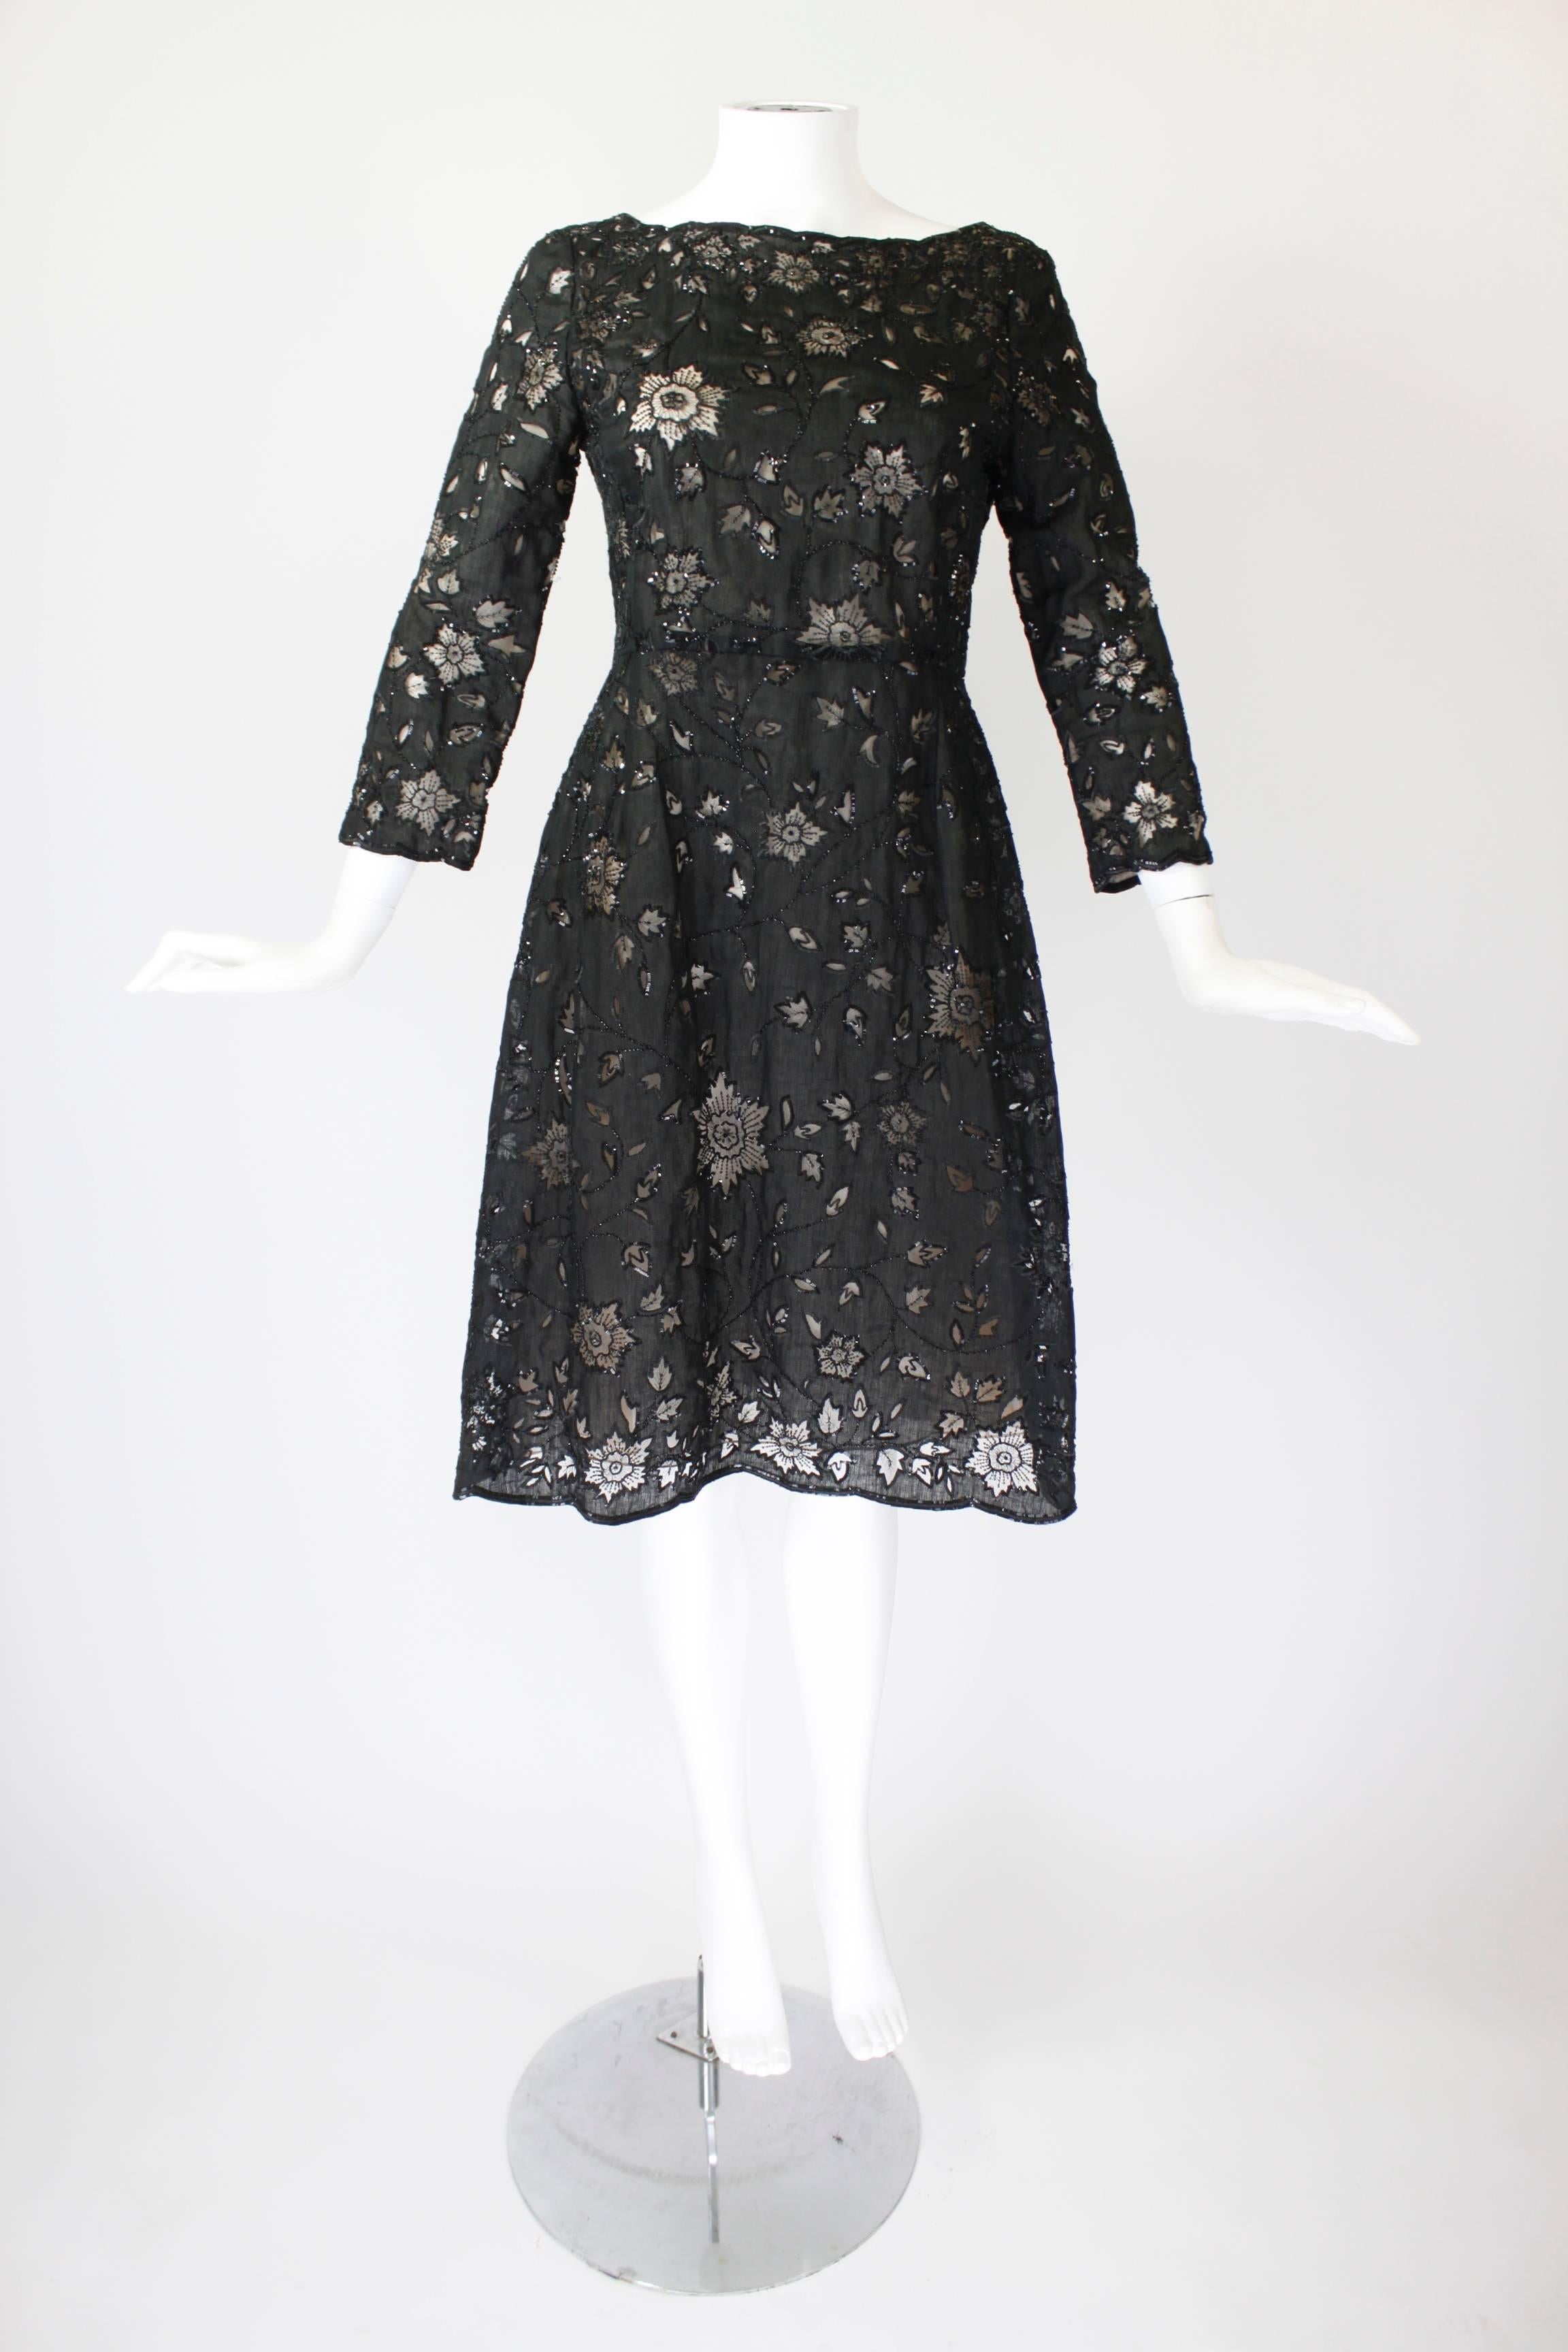 Oscar De La Renta Black Beaded Illusion Lace Organza Cocktail Dress For Sale 1